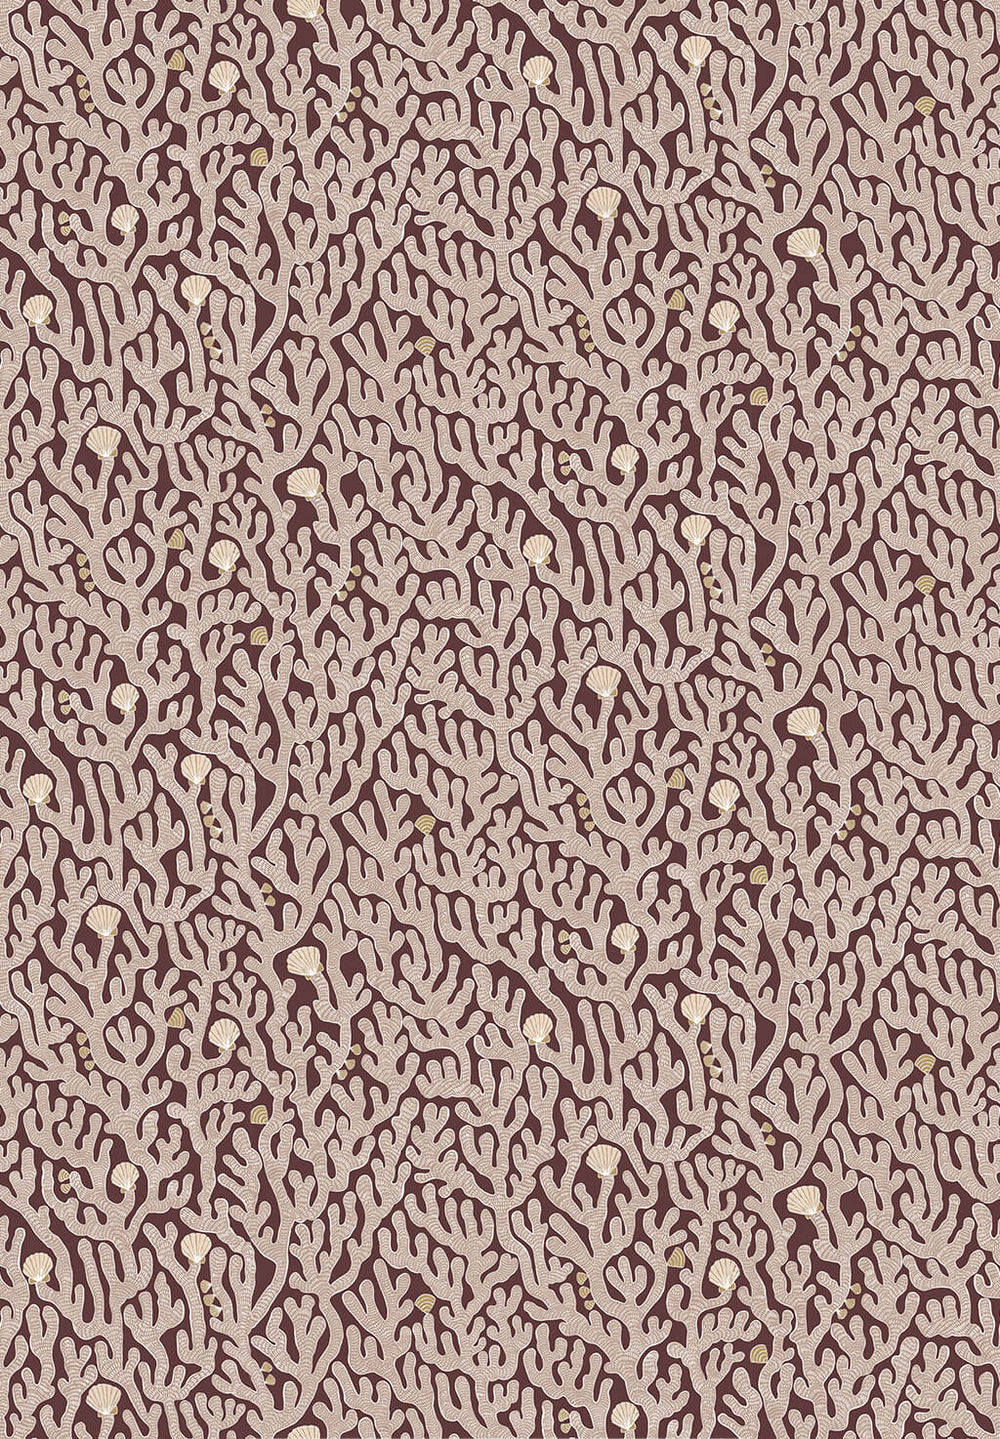 Josephine-munsey-wallpaper-coral-print-illustration-spicer-brown